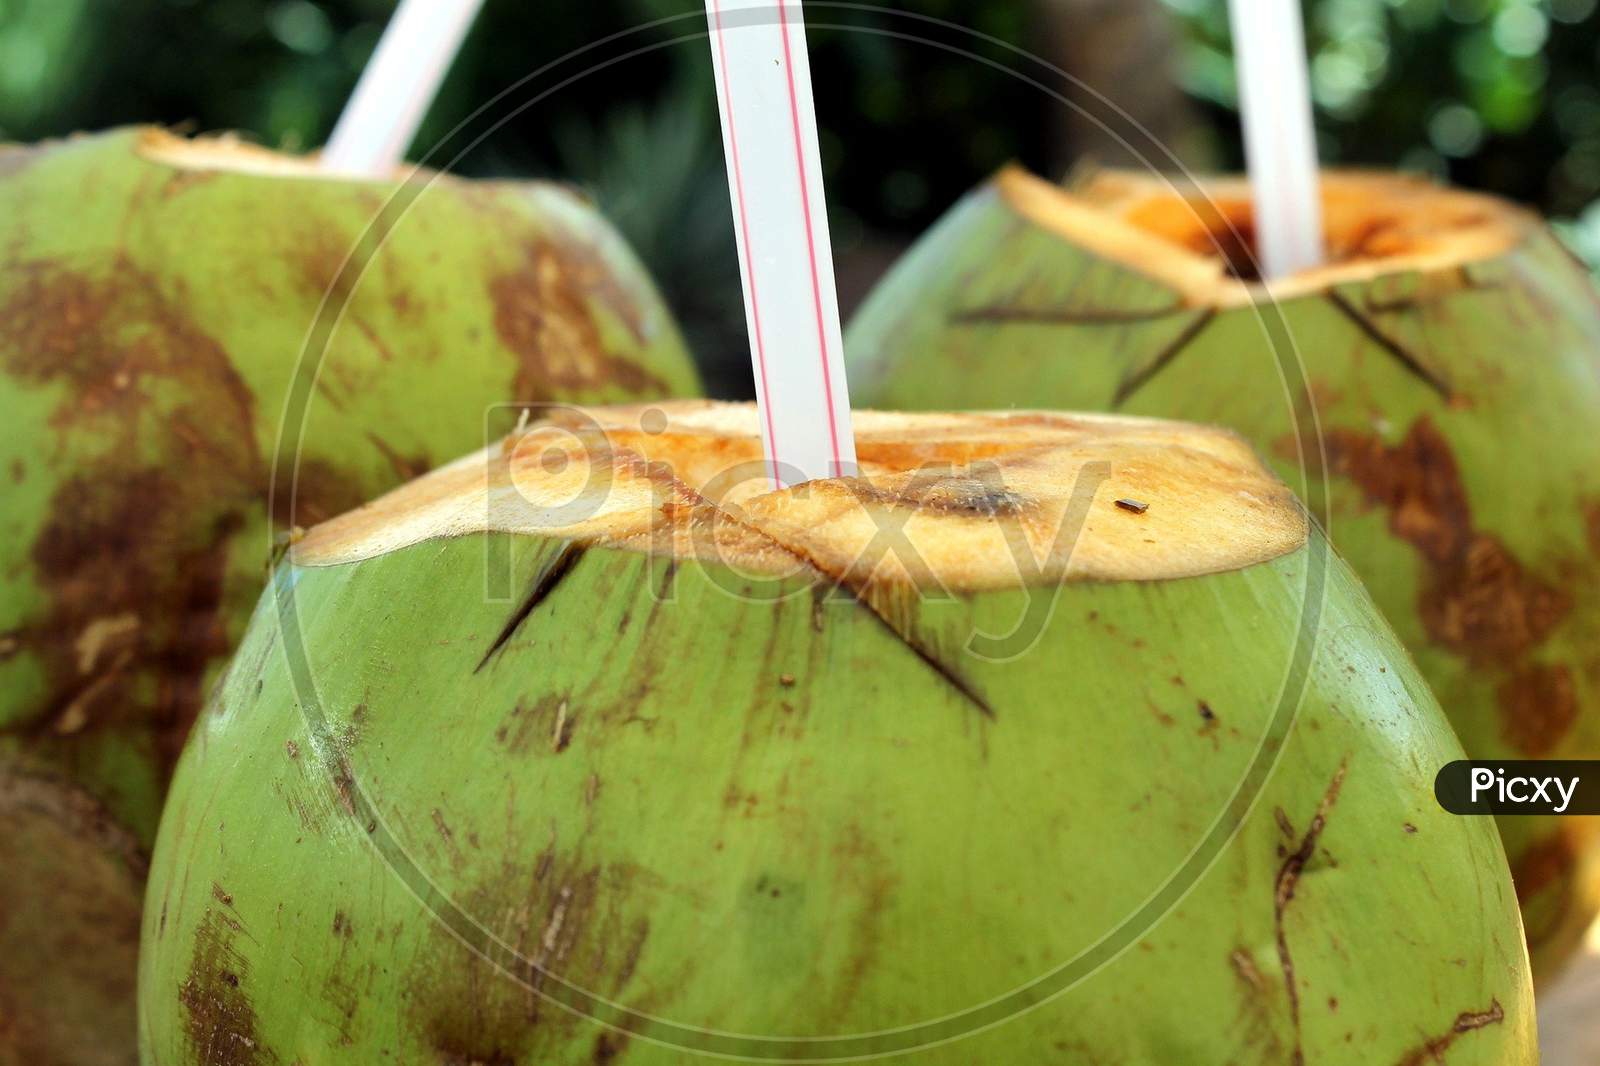 Straw kept inside the tender coconut to suck it's juice